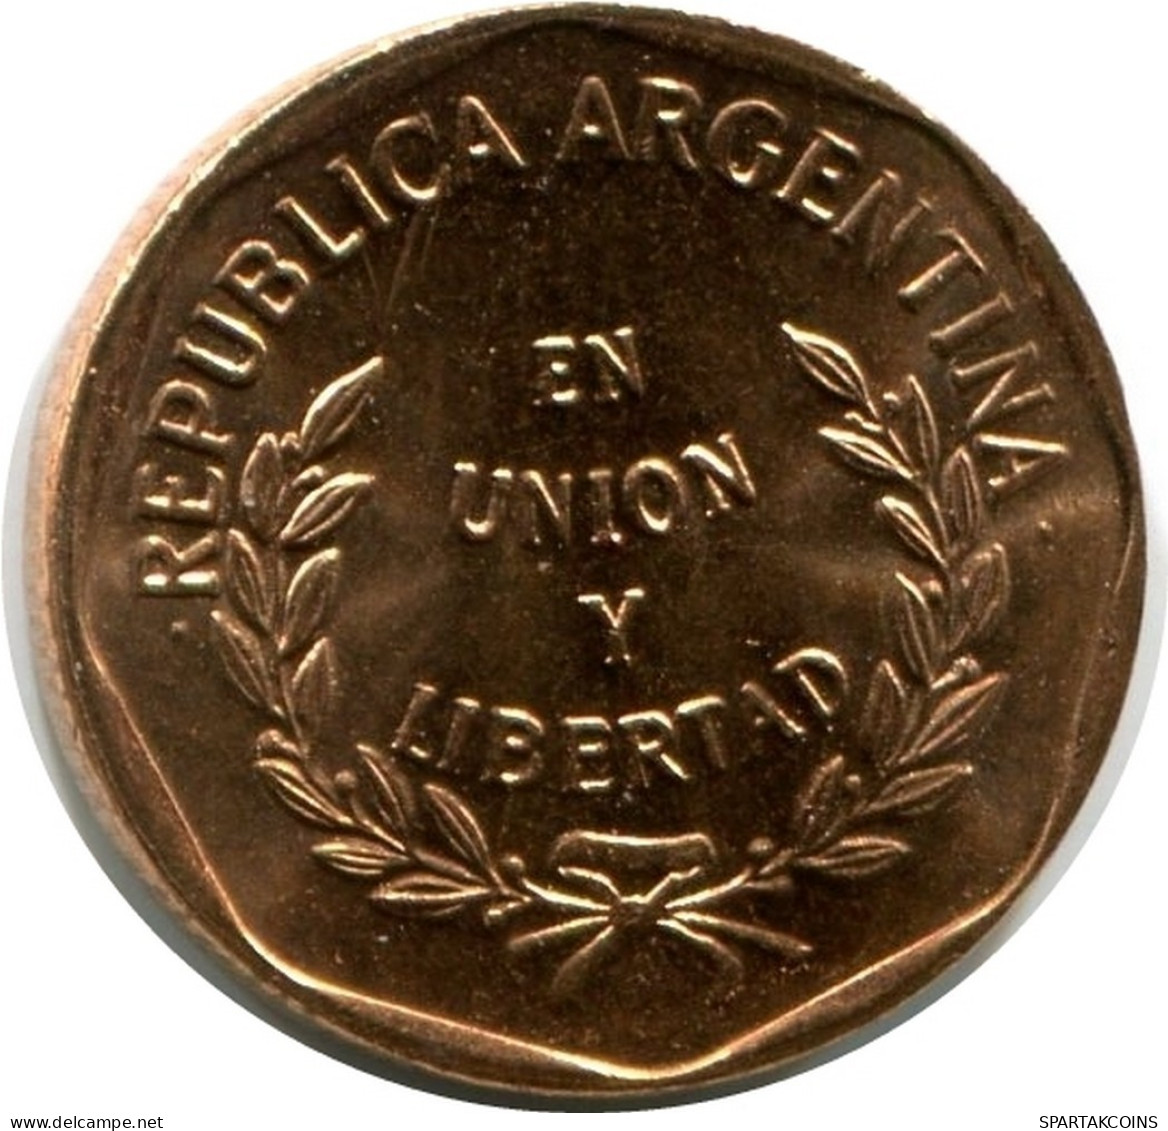 1 CENTAVO 1998 ARGENTINA Moneda UNC #M10137.E.A - Argentina